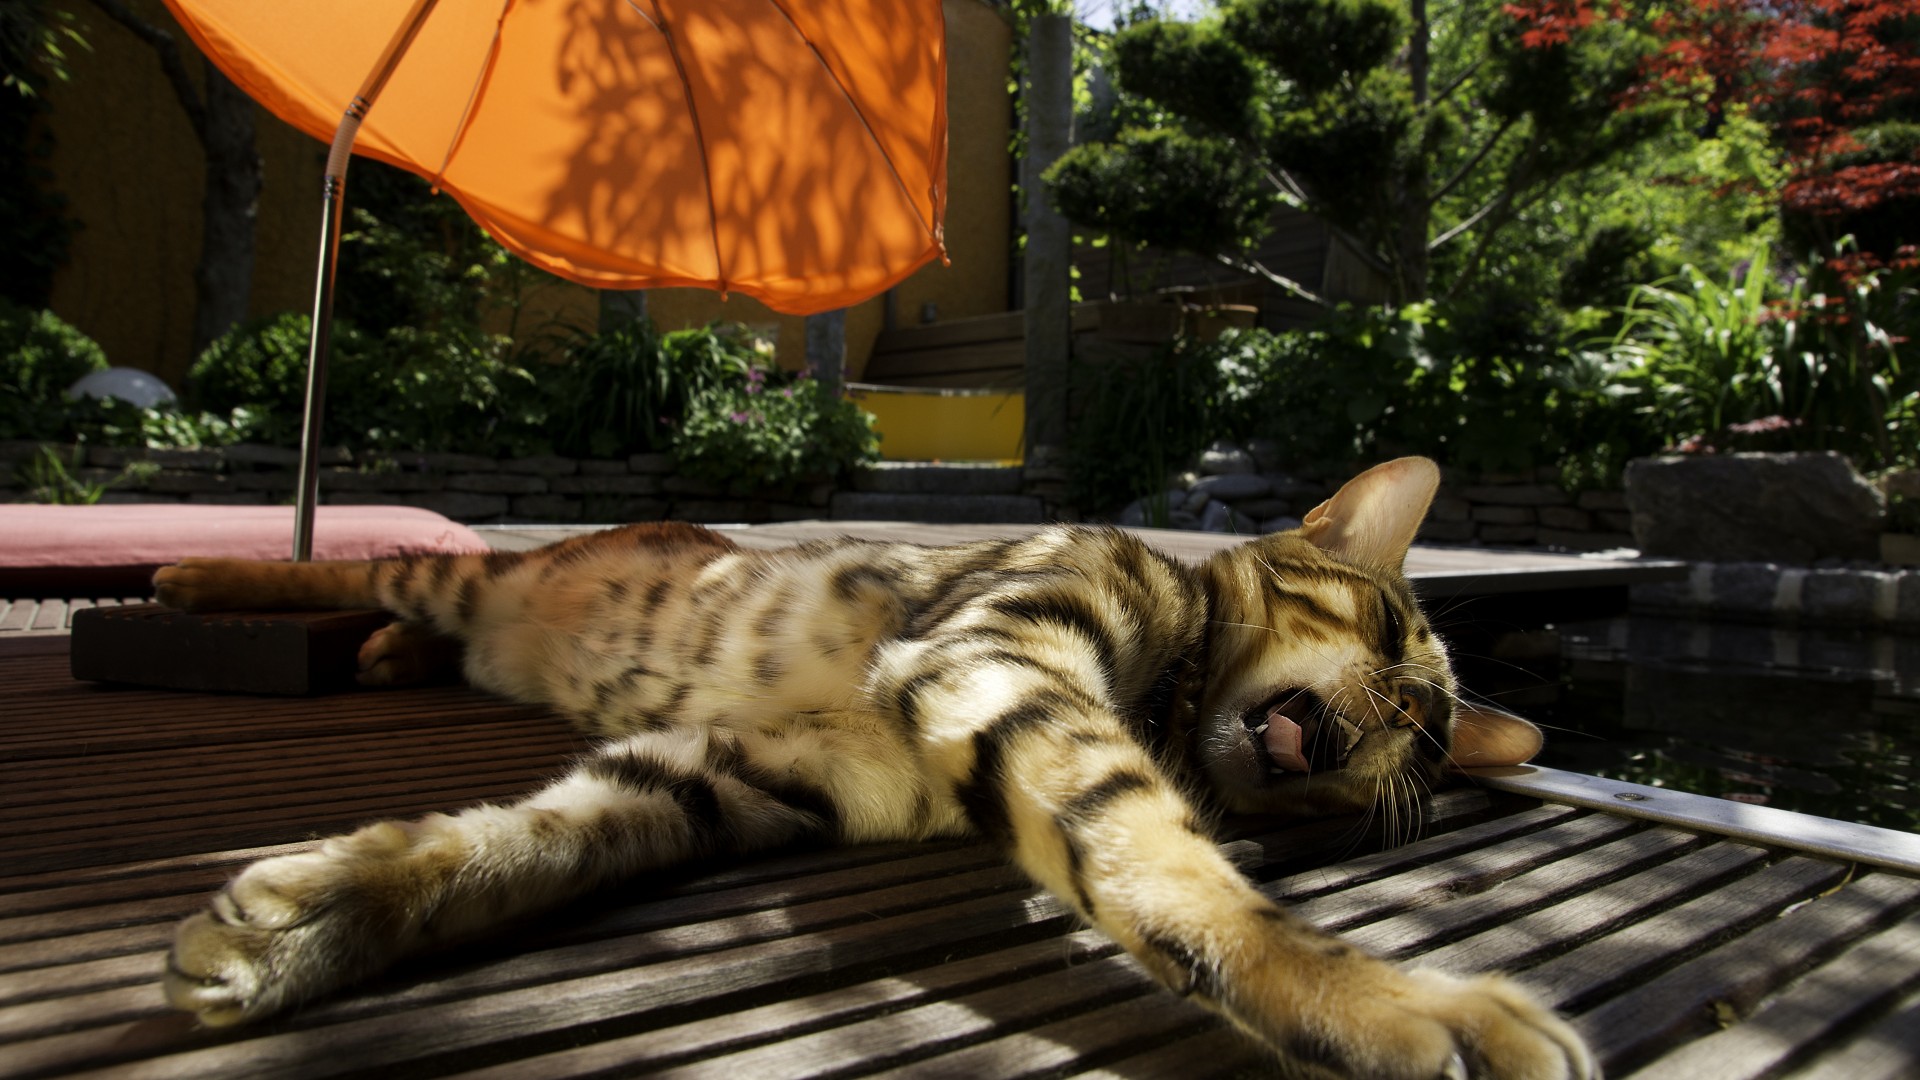 кот, кошка, зевает, отдых, полосатый, зонт, зеленый, Cat, kitty, kitten, yawns, striped, umbrella, green, relax (horizontal)